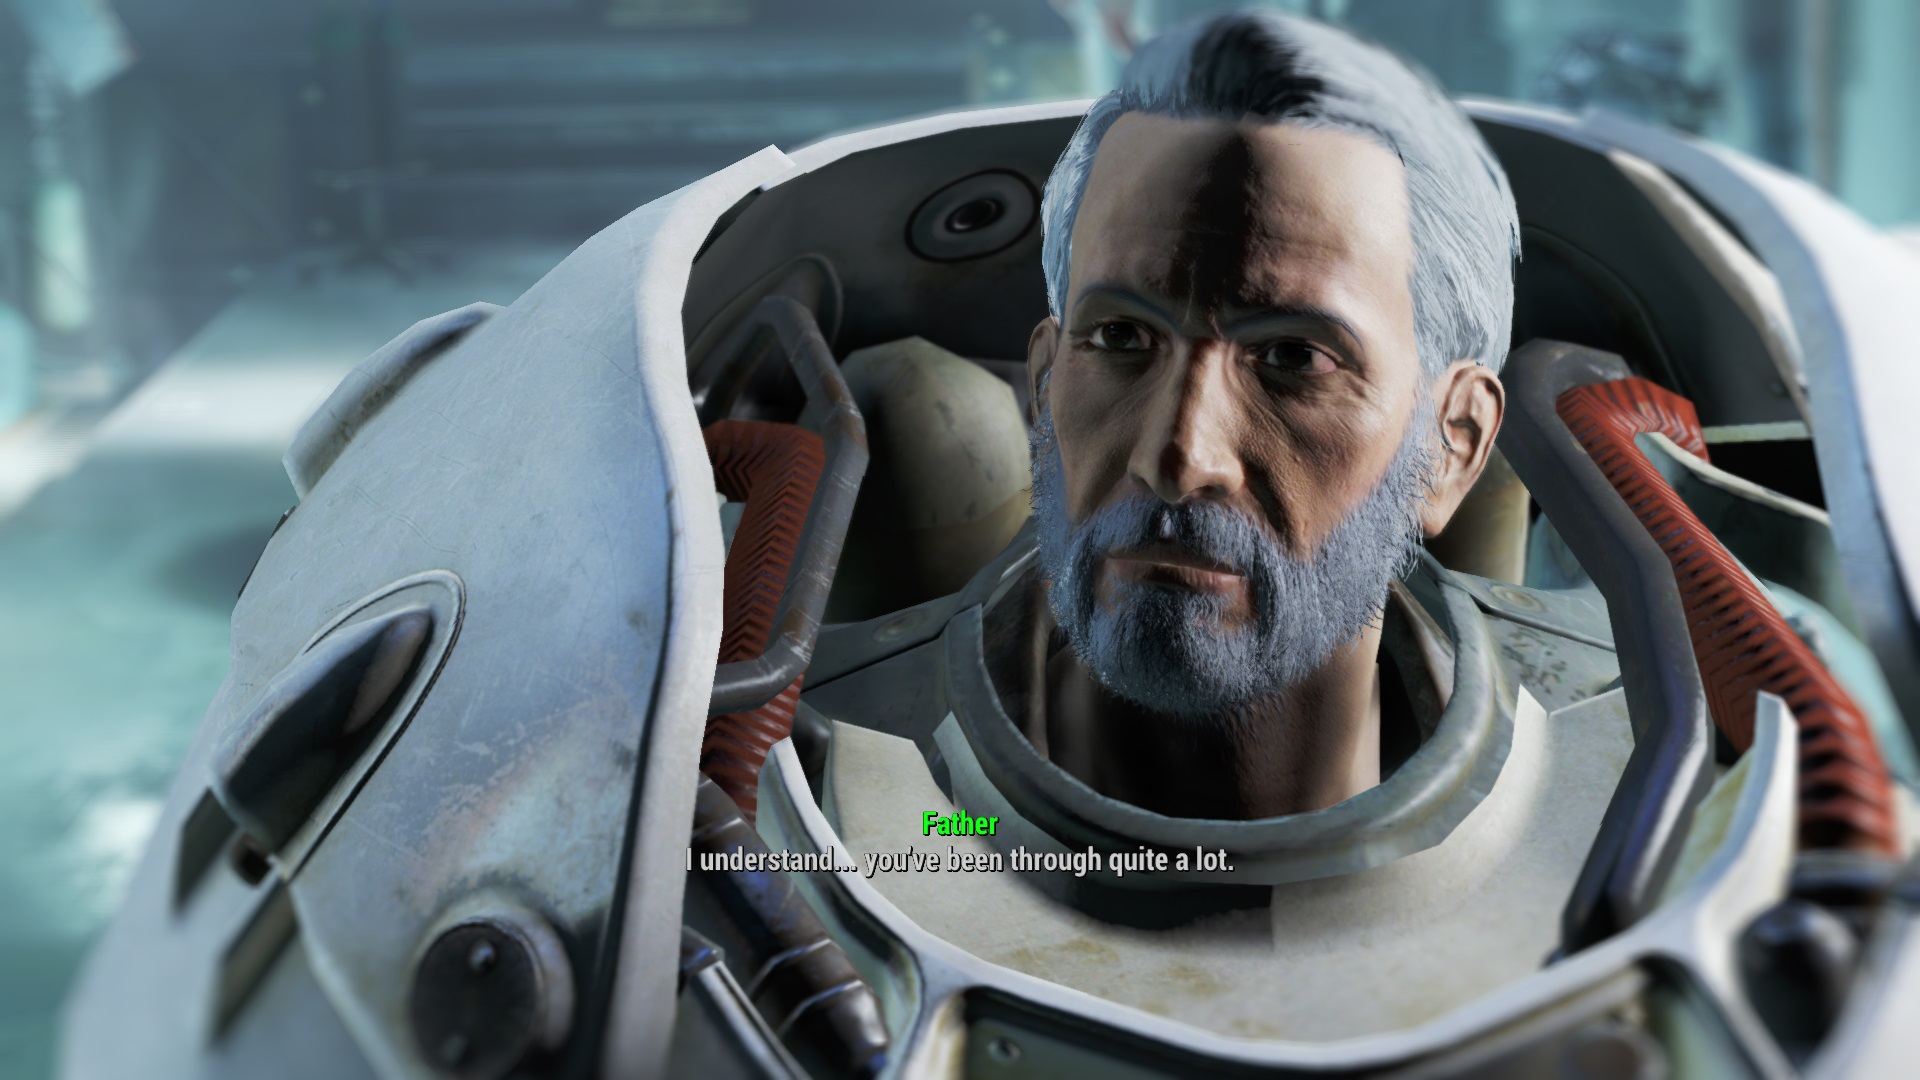 Father Companion - Alternate Ending Option for Fallout 4 mod.